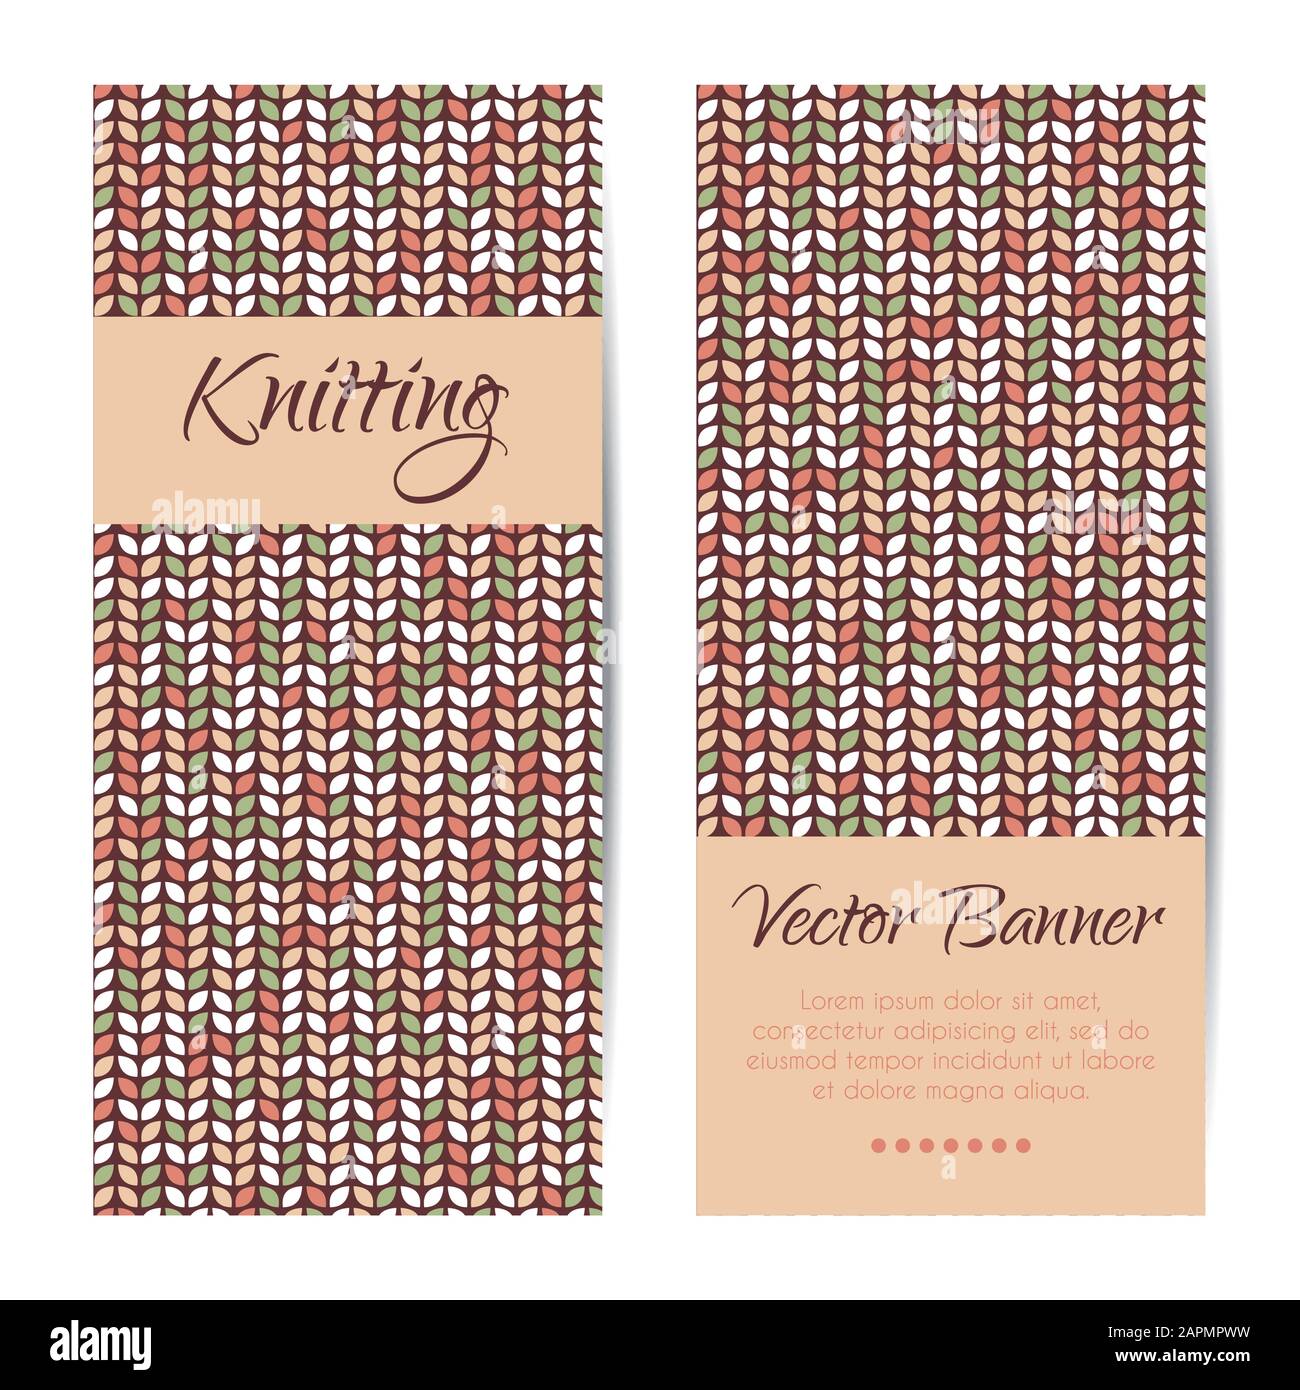 Vector banners, brochures set. Knitting pattern Stock Vector